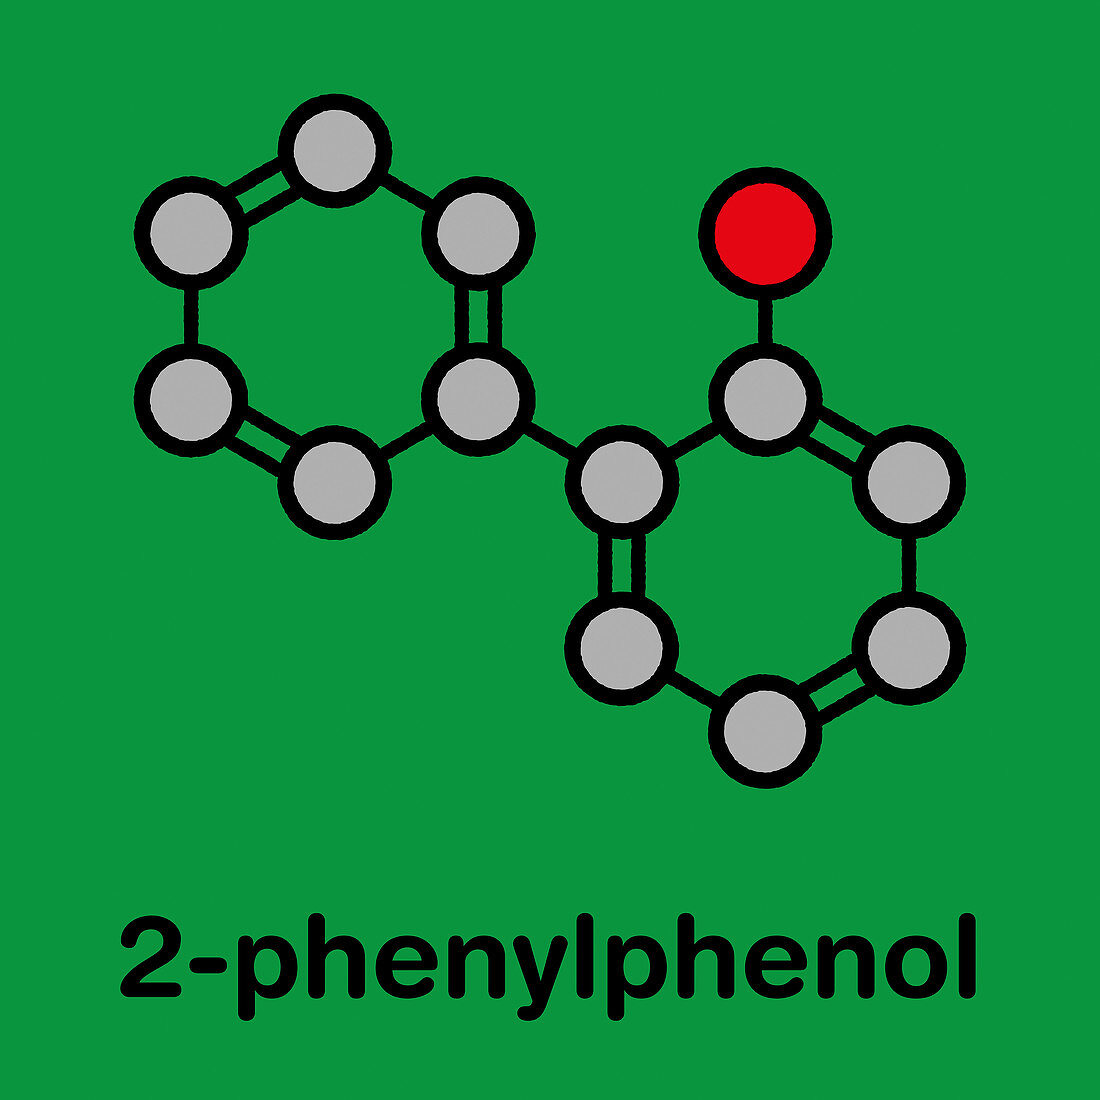 2-phenylphenol preservative molecule